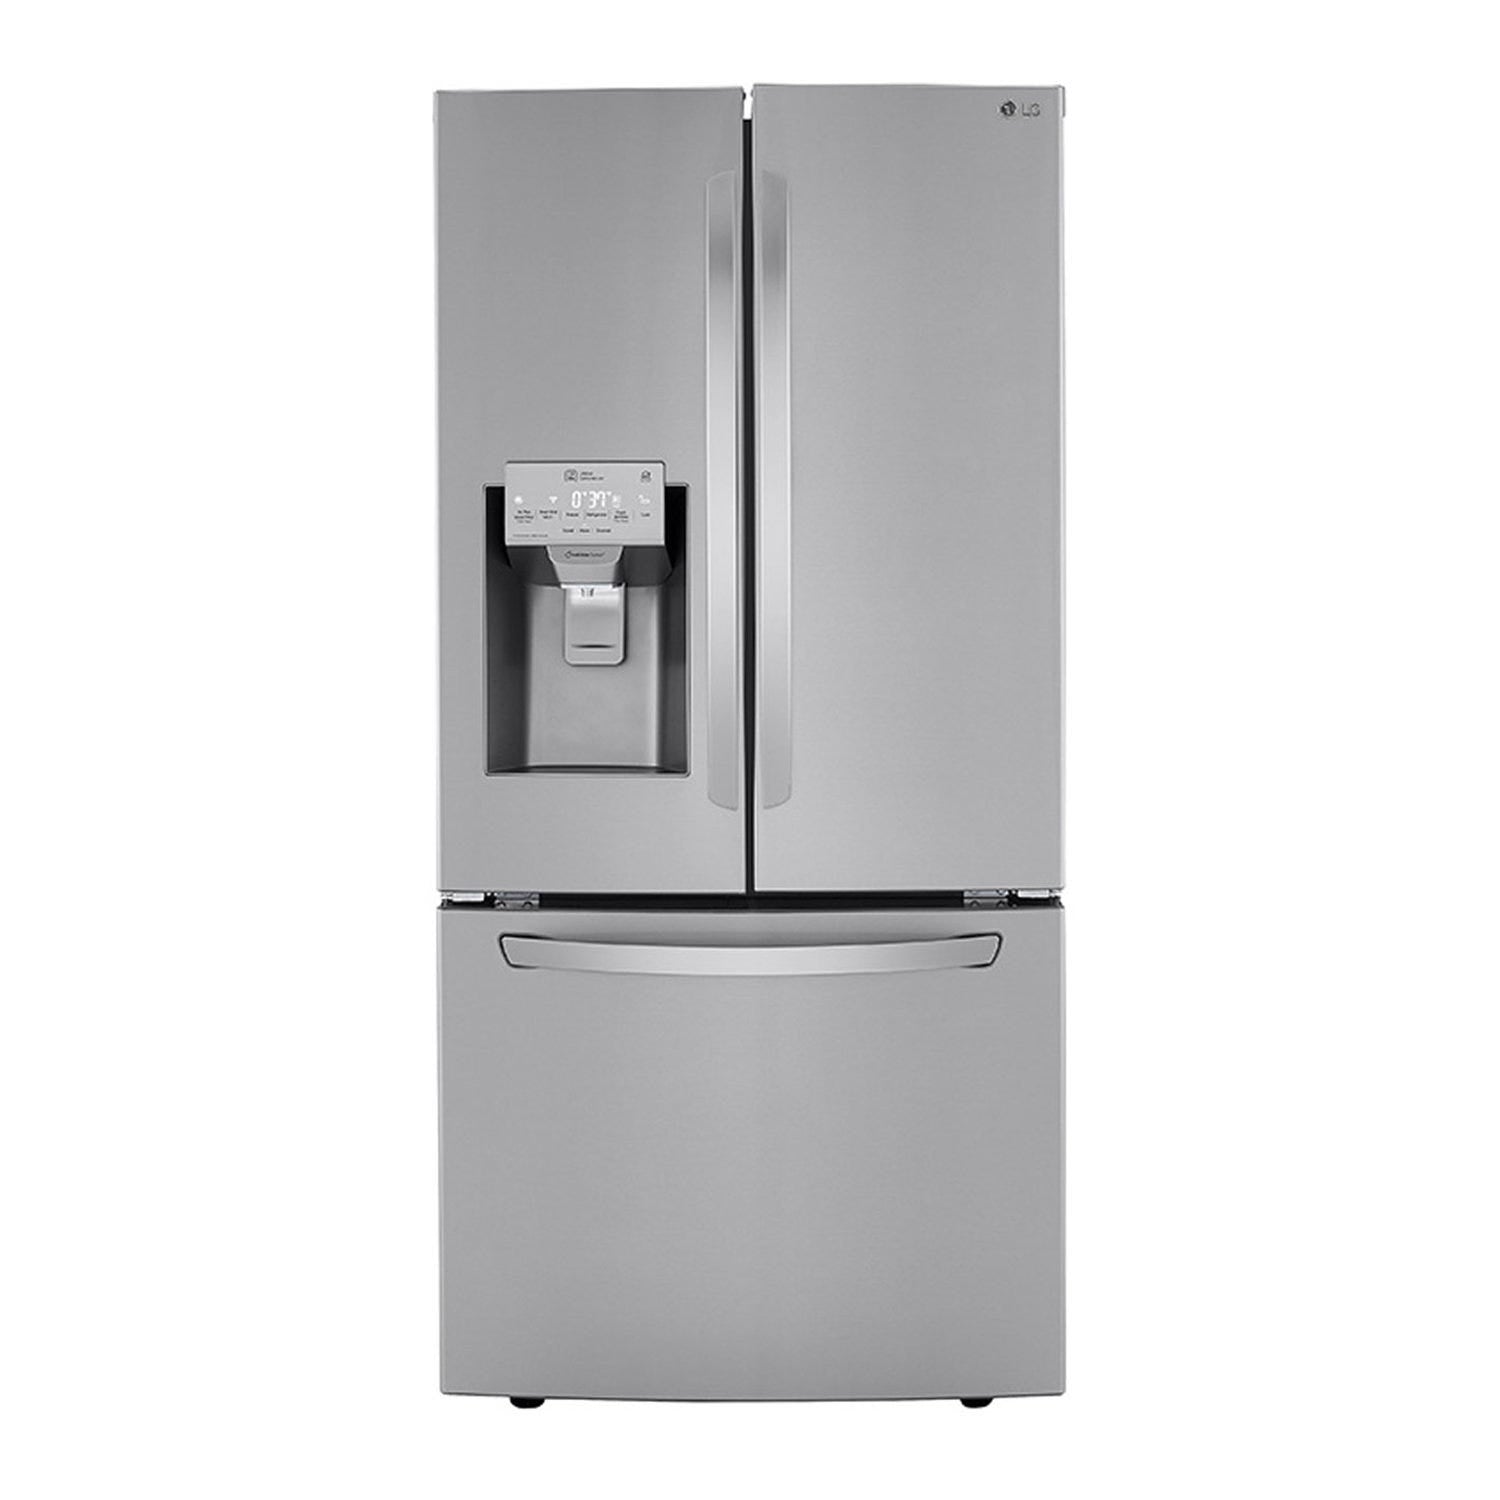 LG Electronics 33-inch W 24.5 cu. ft. French Door Refrigerator